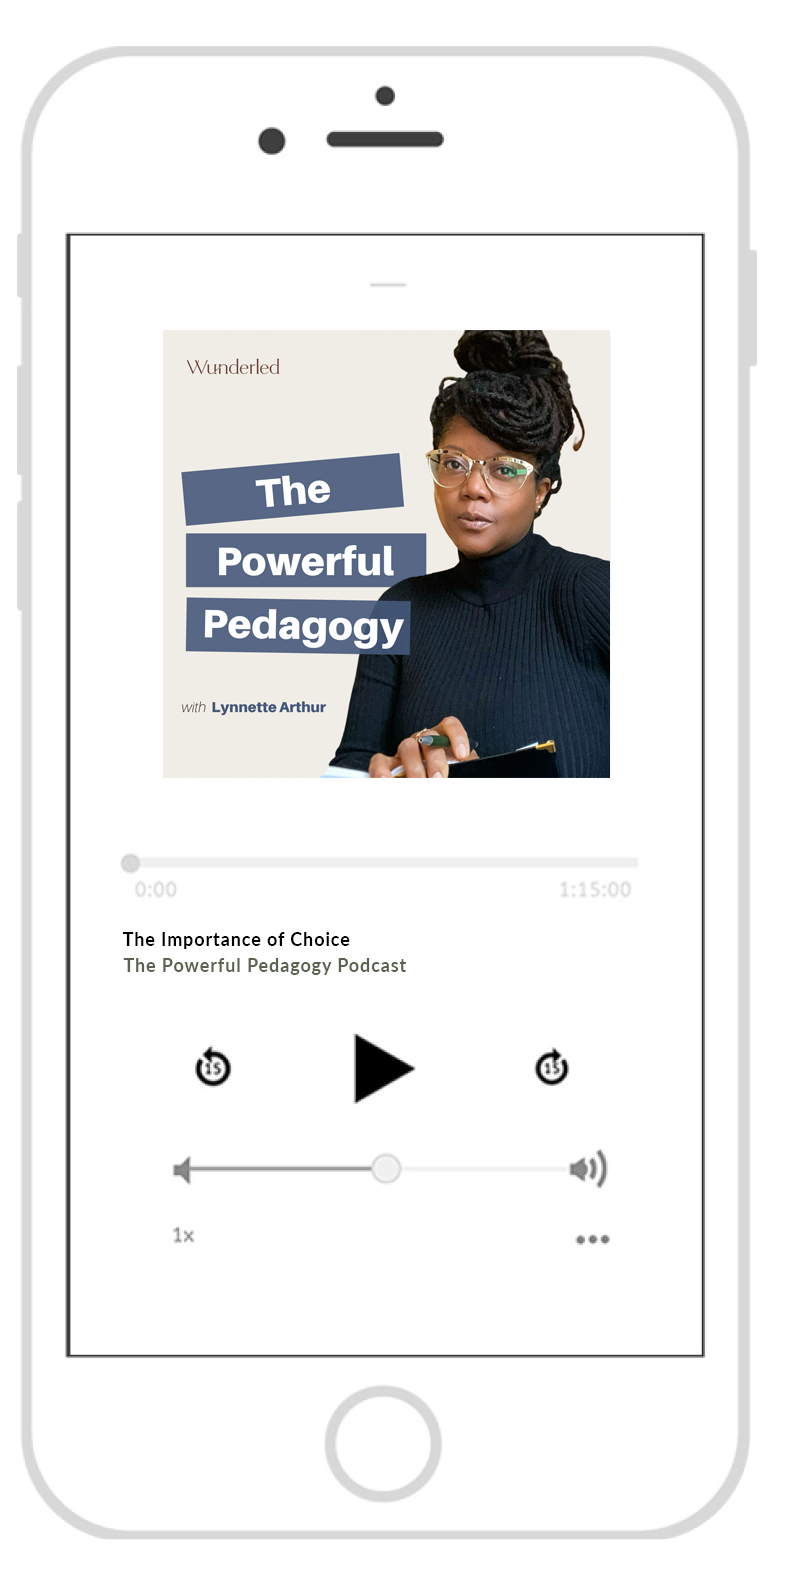 The Powerful Pedagogy podcast